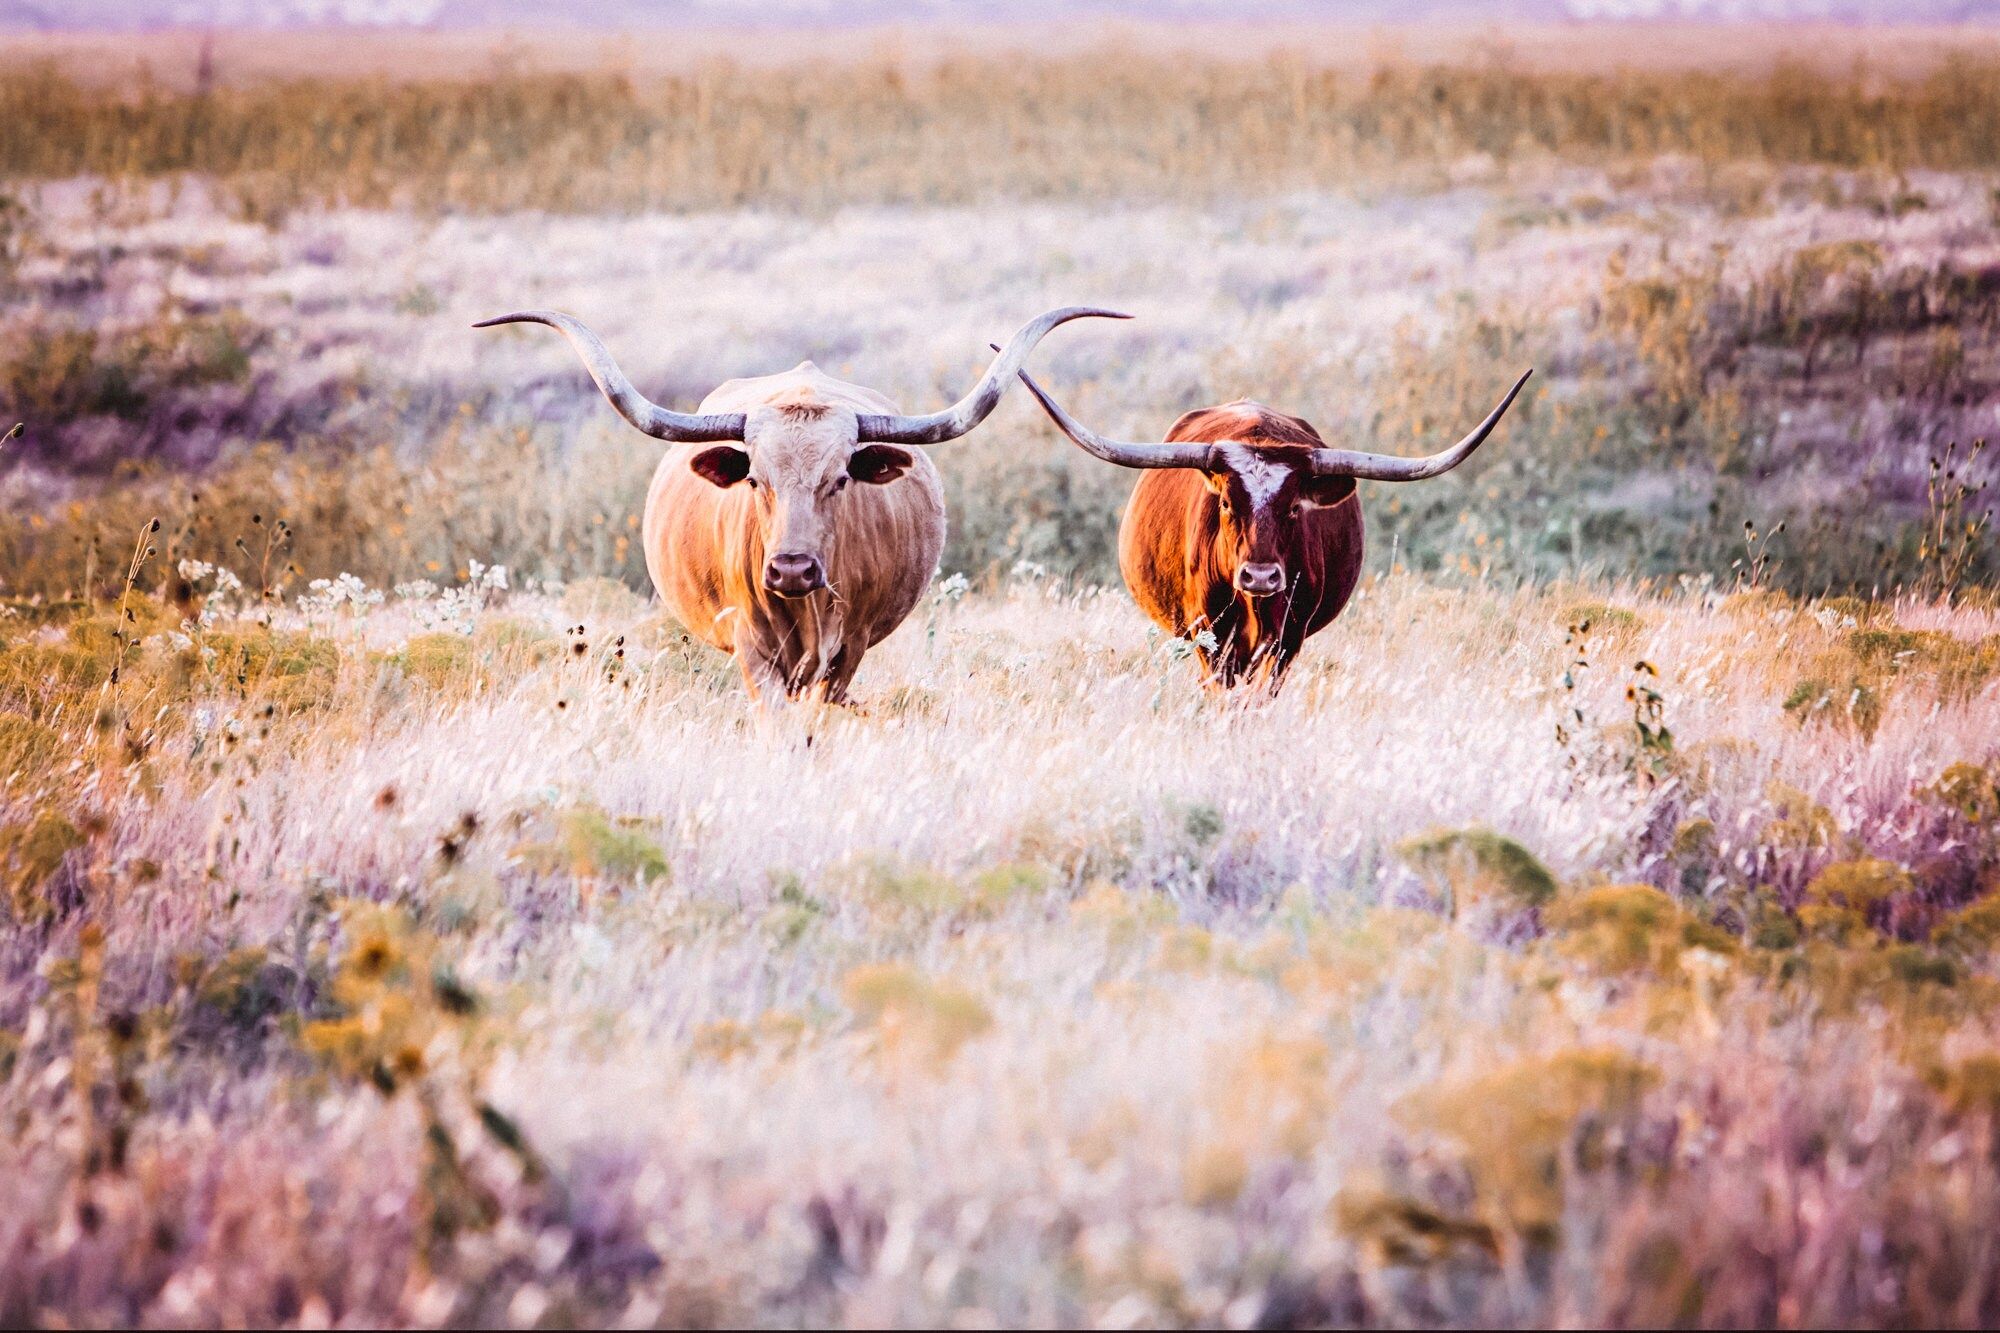 Two longhorn cattle in a field of tall grass - Longhorn